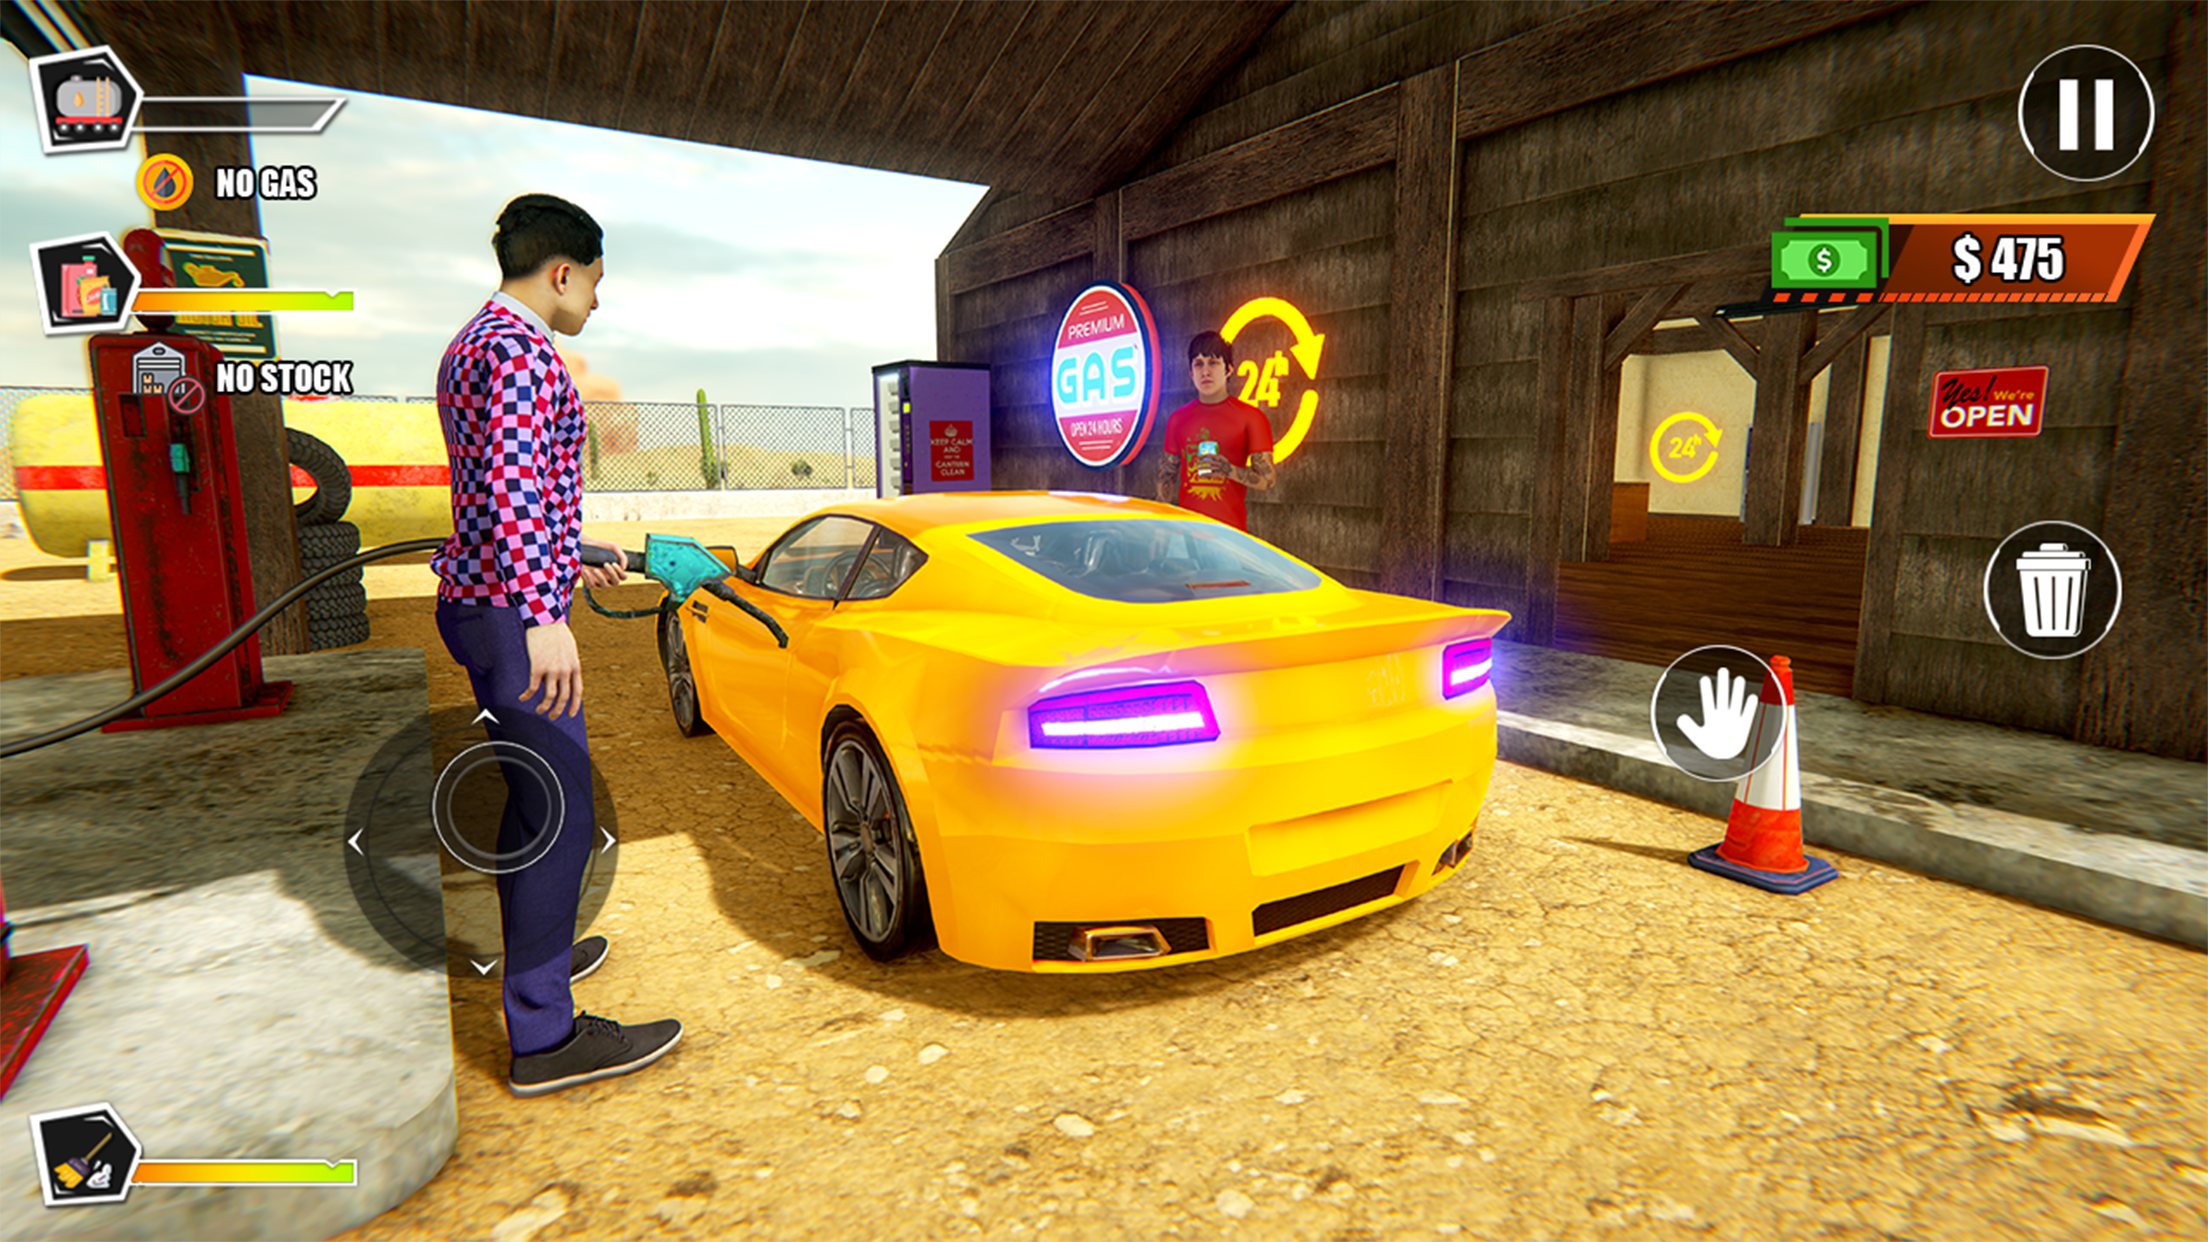 Screenshot 1 of Gas Station Simulator Car Wash Game 0.7.3